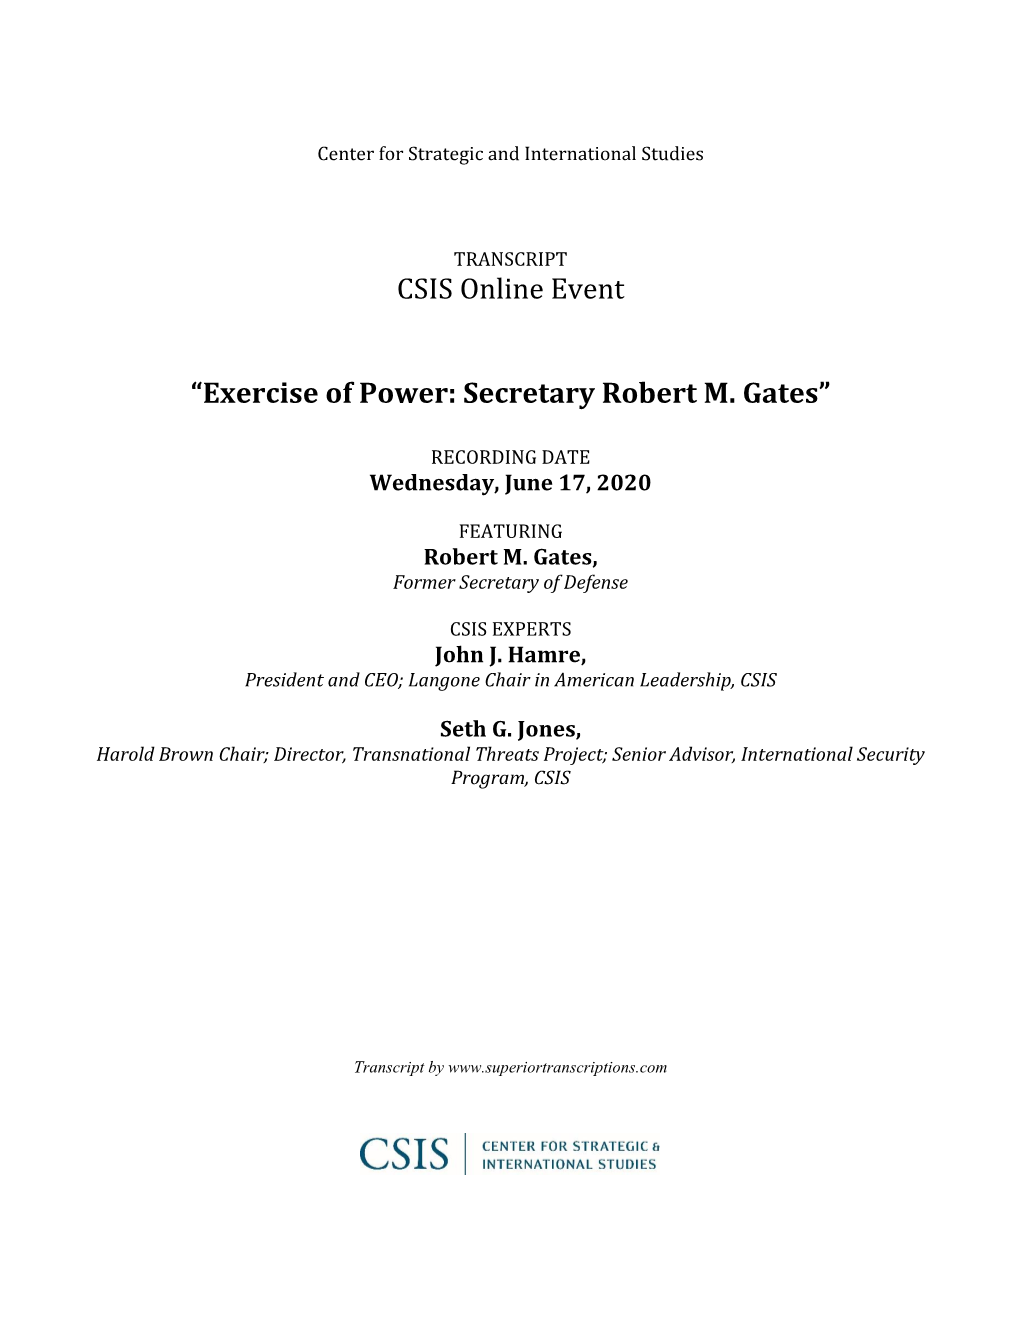 Exercise of Power: Secretary Robert M. Gates”